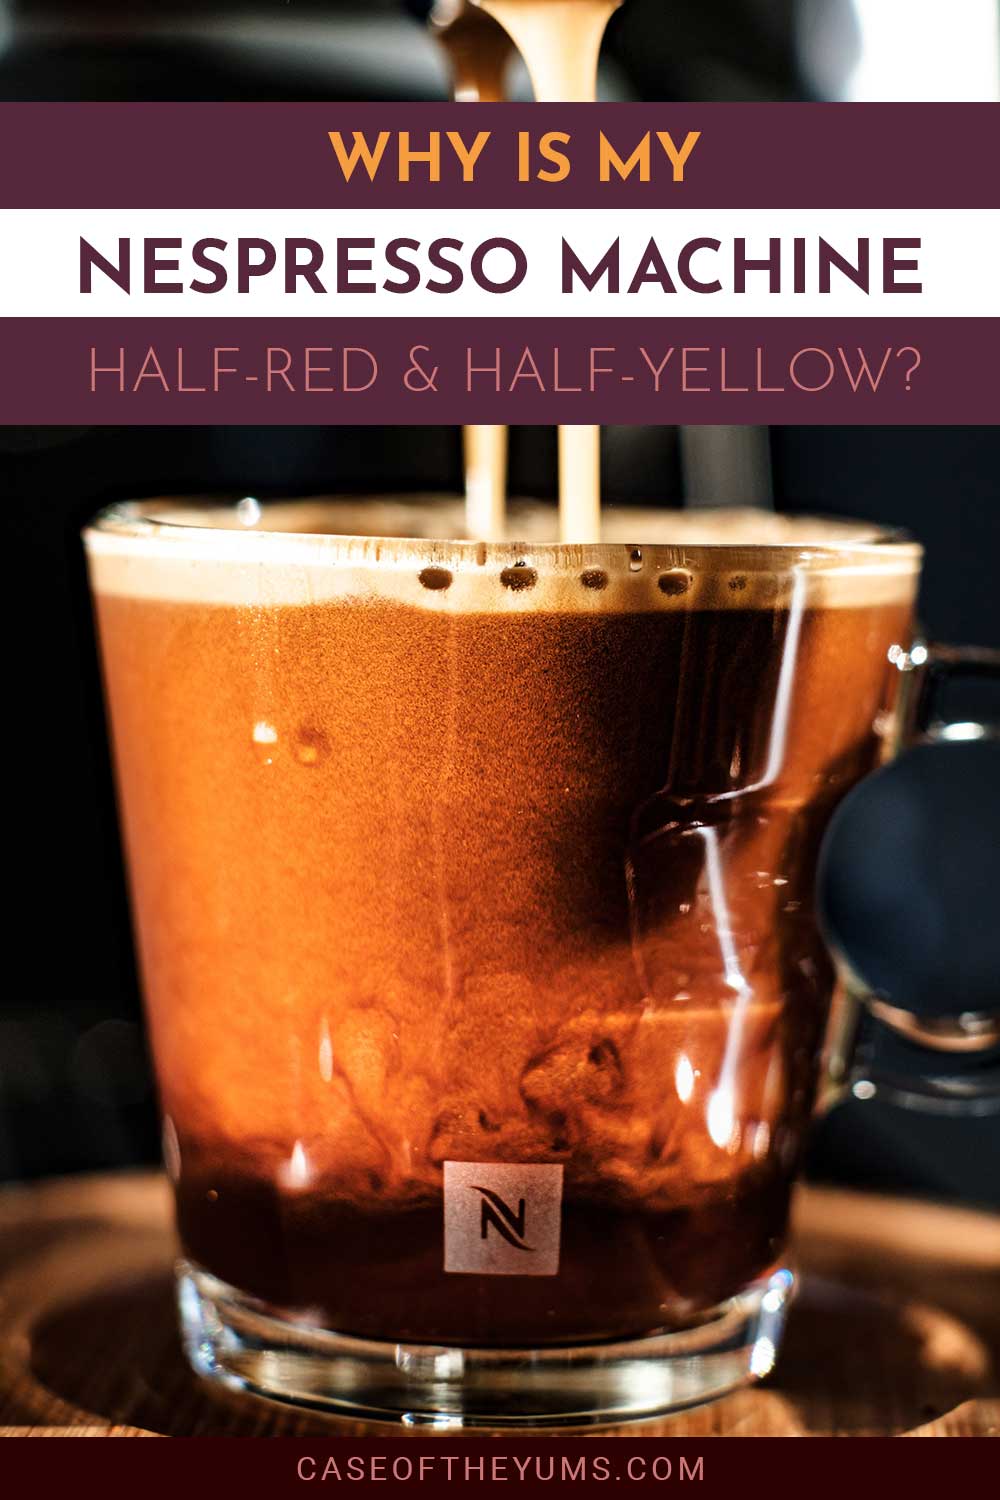 Nespresso logo on a cup - Why is my Nespresso Machine Half-Red & Half-Yellow?